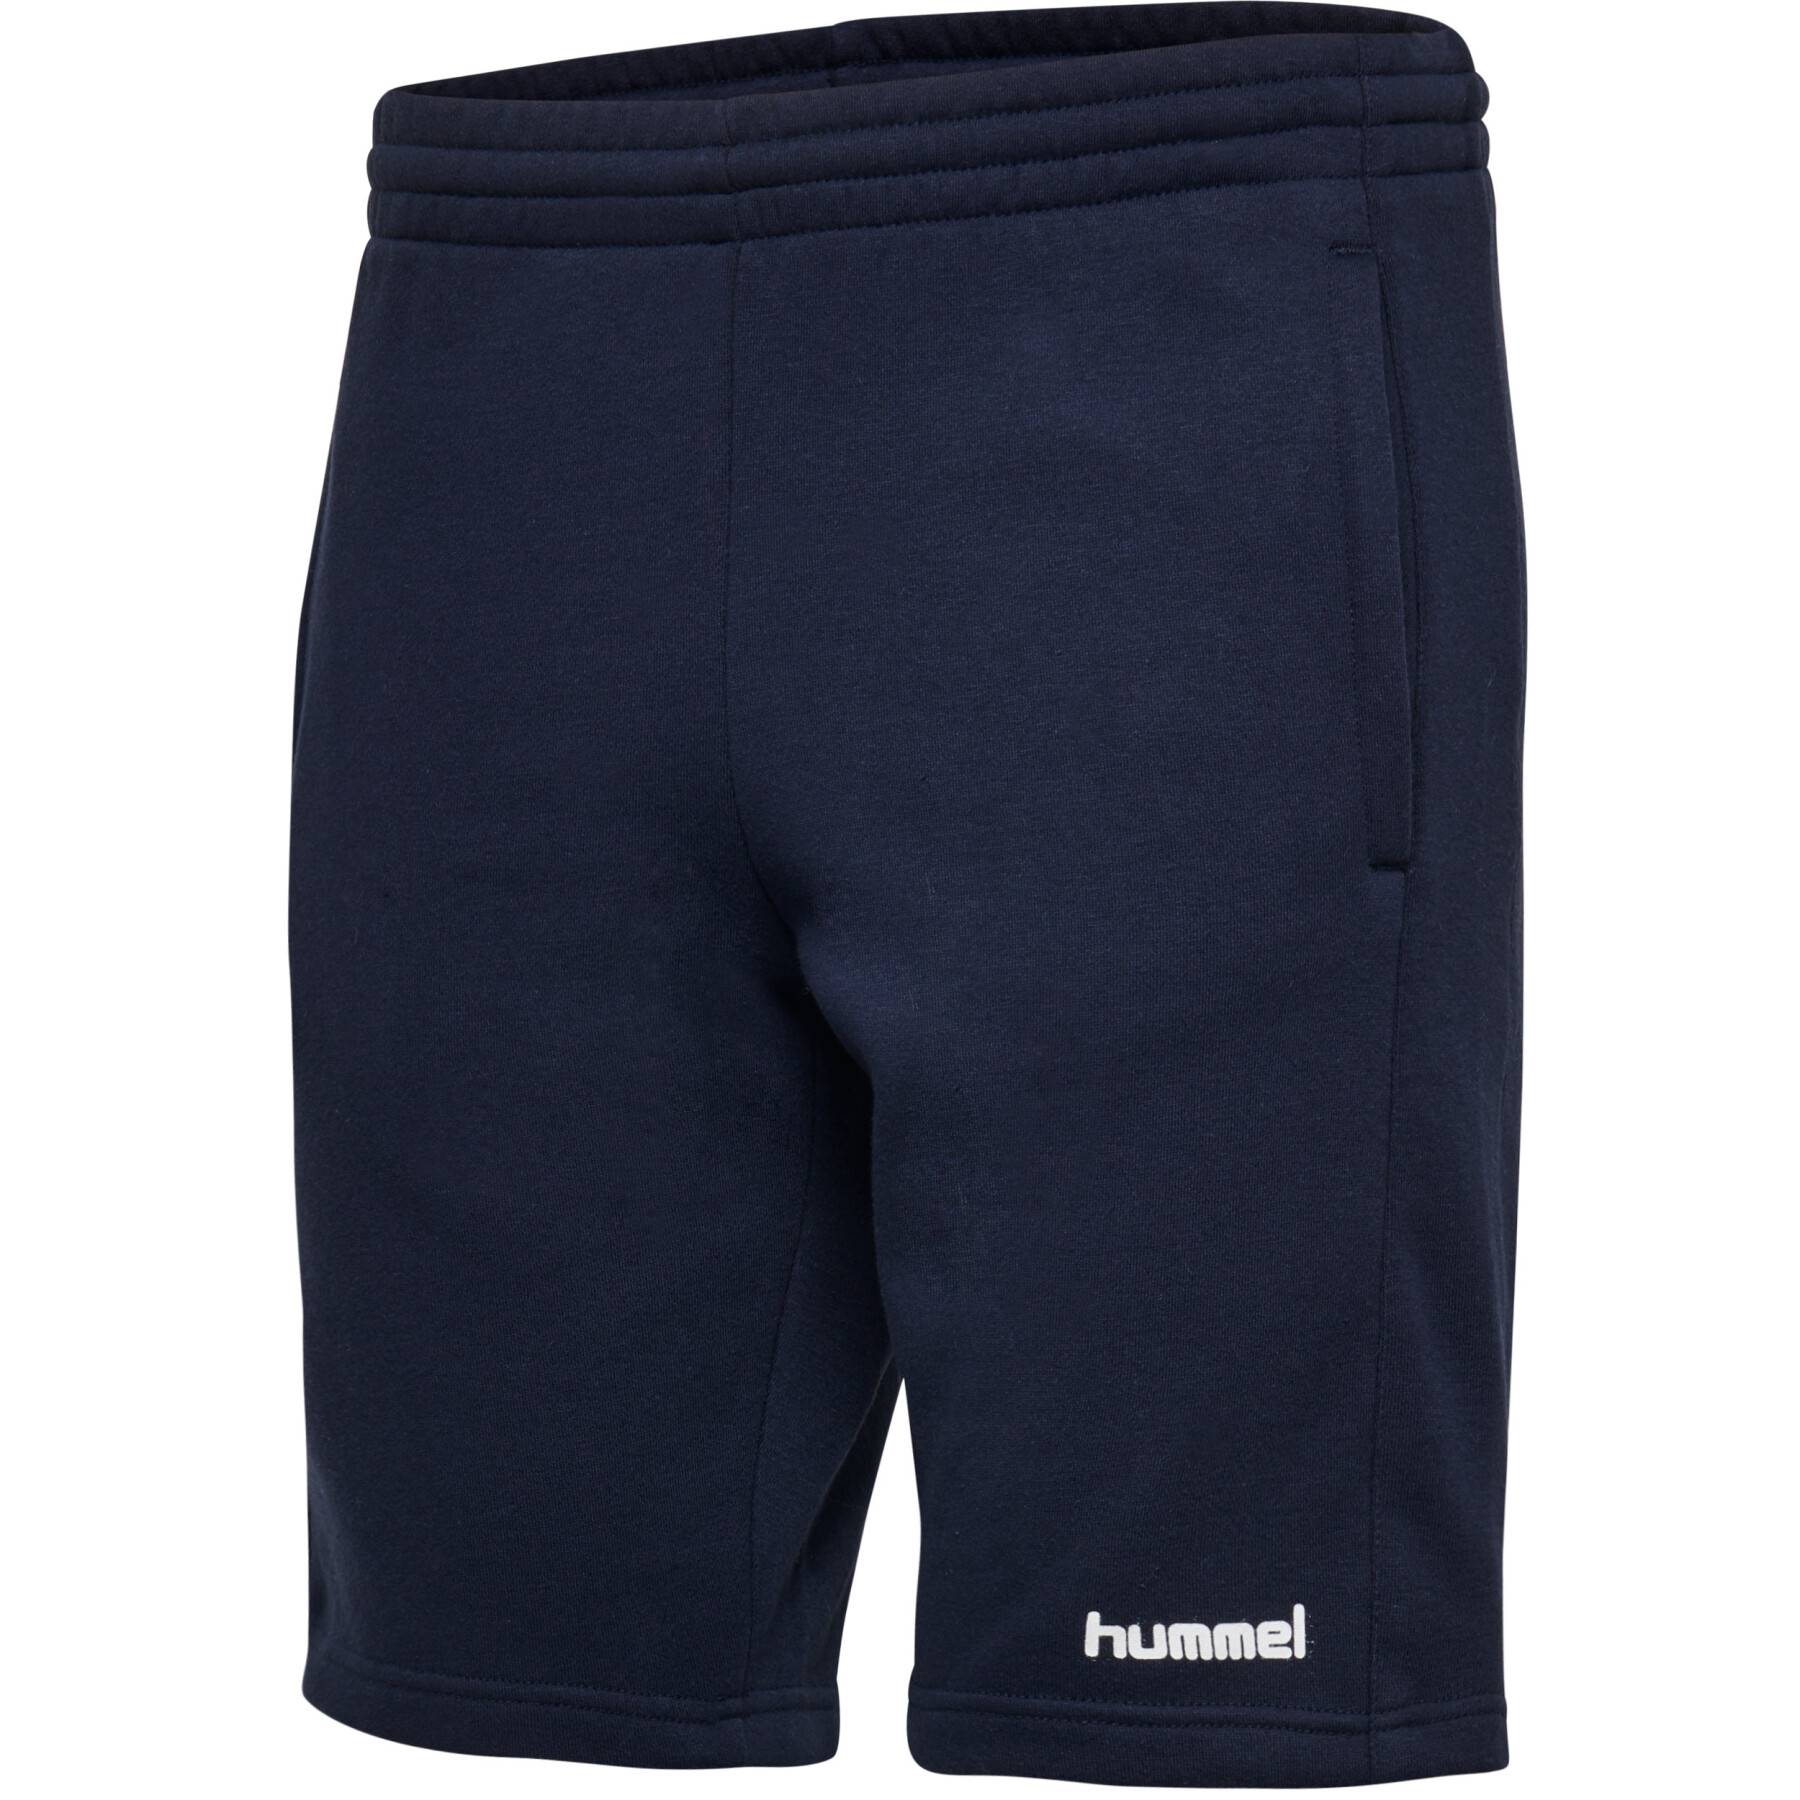 Women's shorts Hummel hmlGO cotton